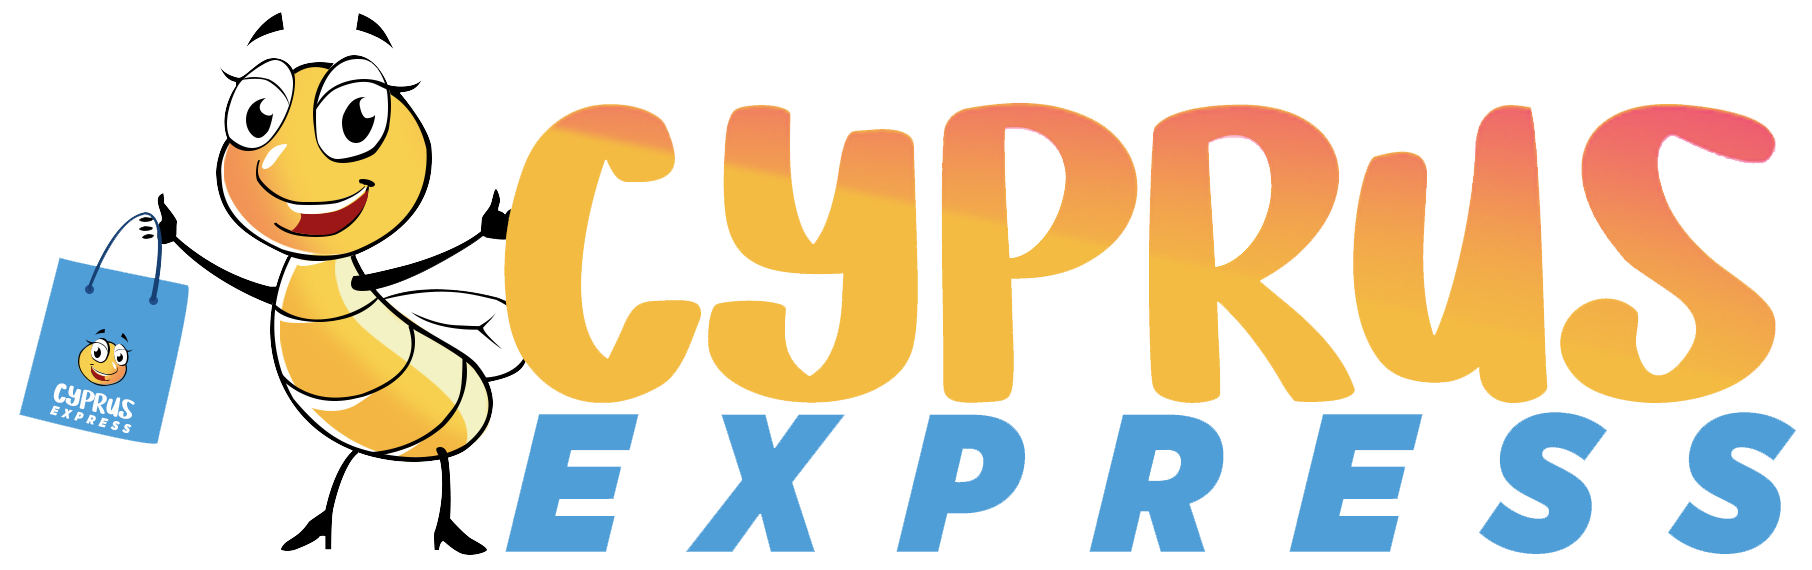 Cyprus Express